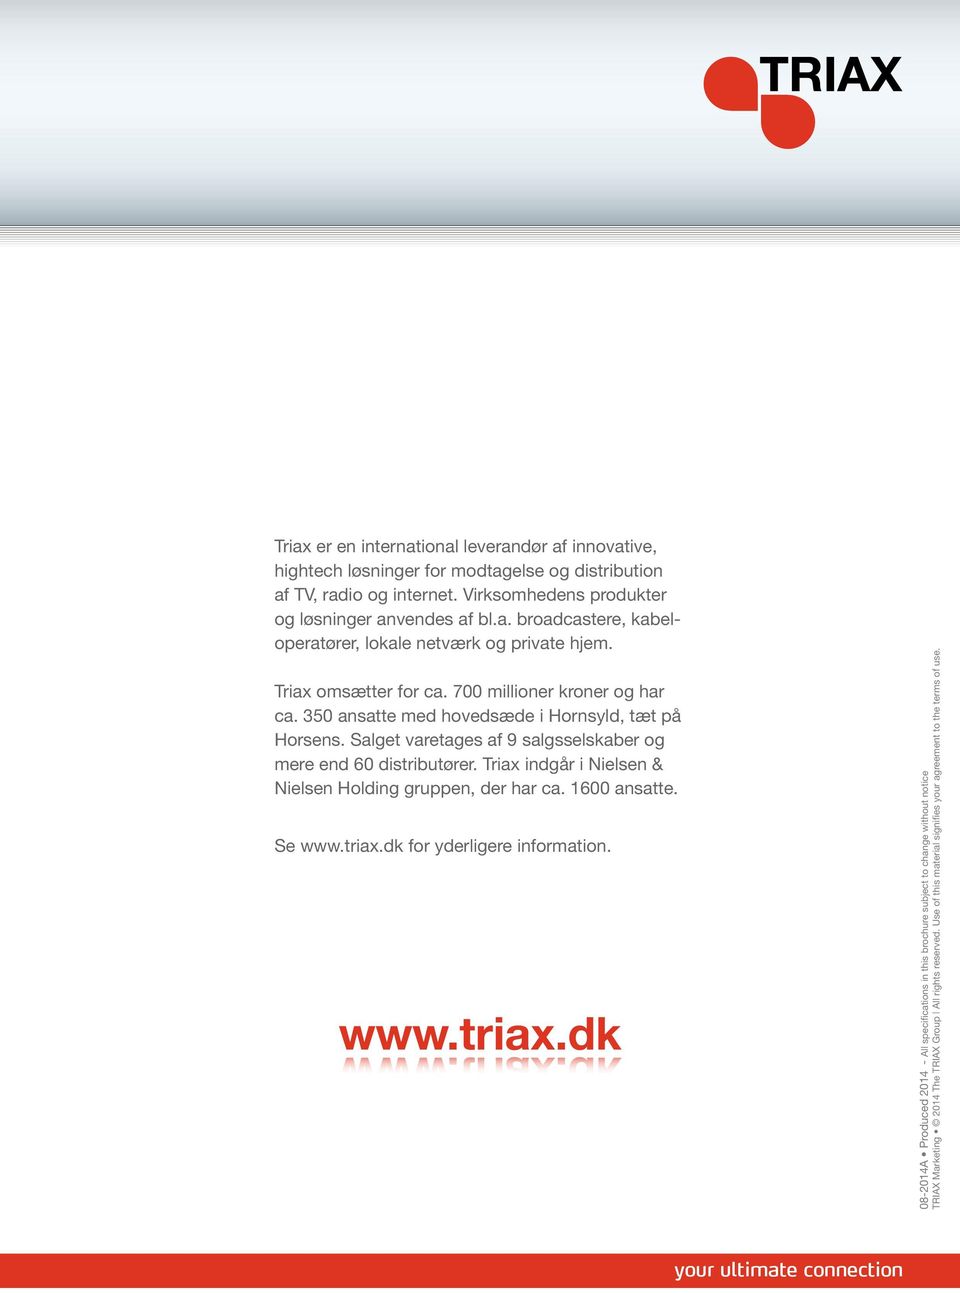 Triax indgår i Nielsen & Nielsen Holding gruppen, der har ca. 1600 ansatte. Se www.triax.